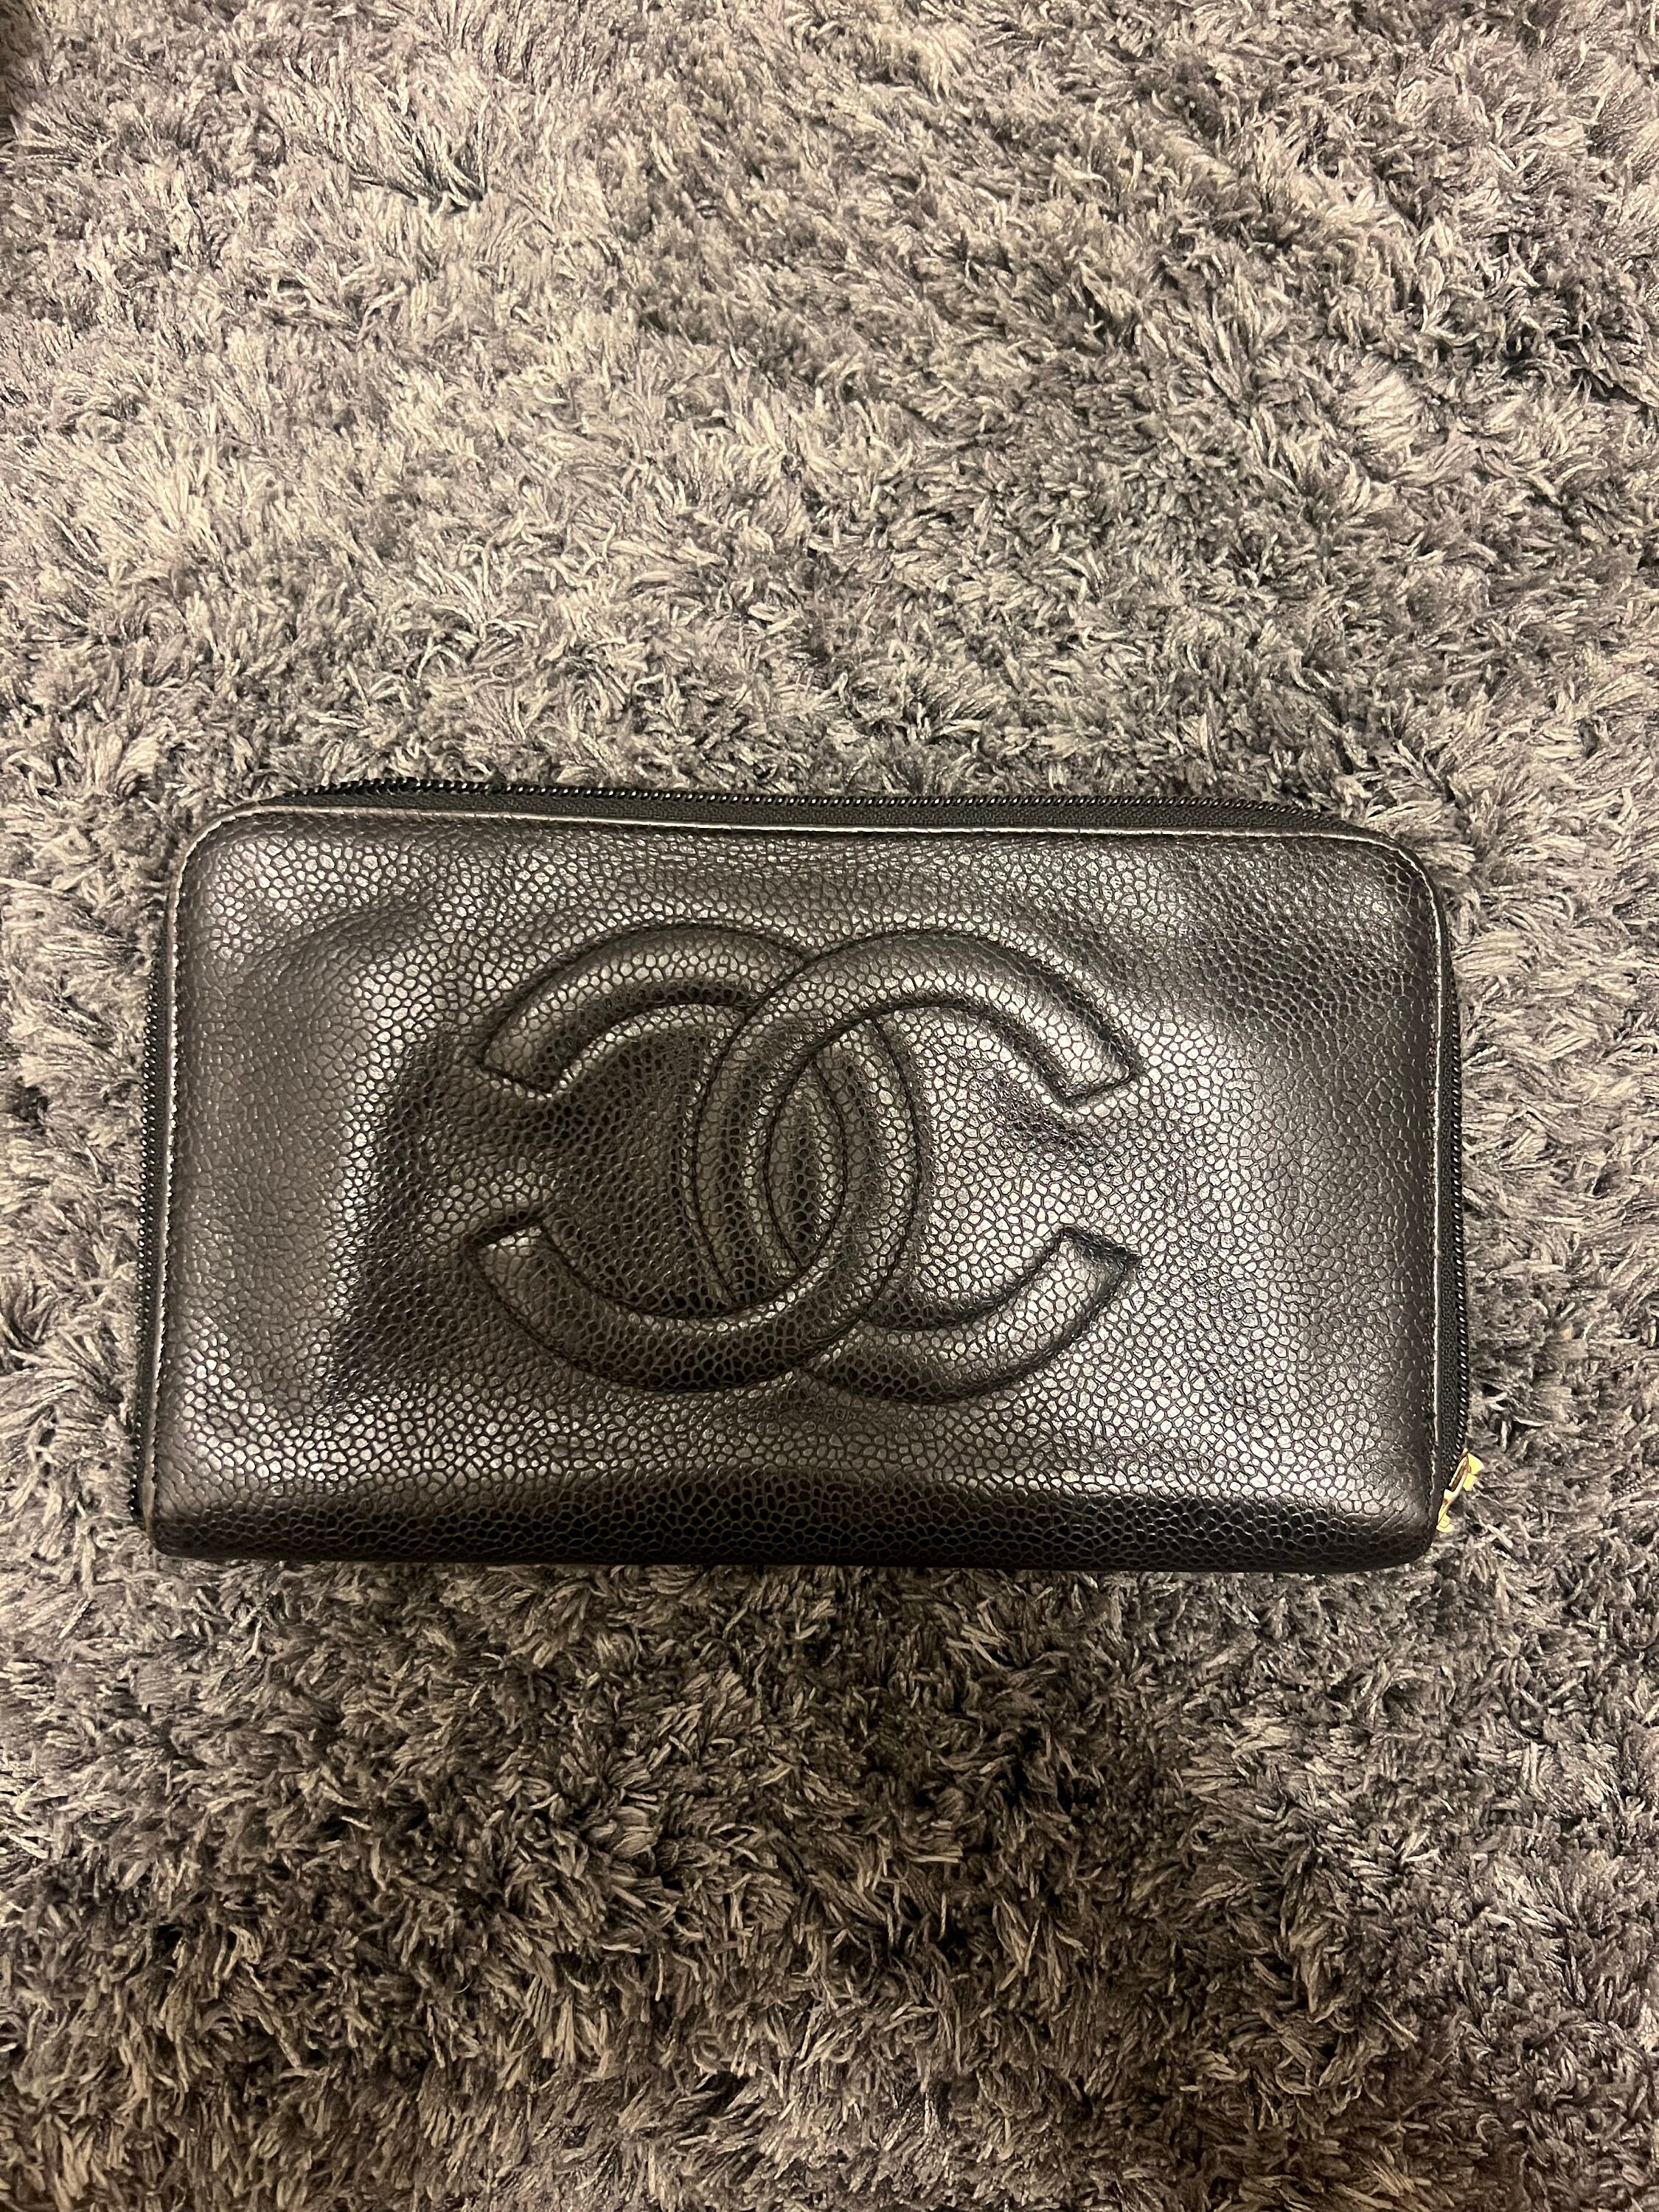 KAWS × Louis Vuitton inspired wallet